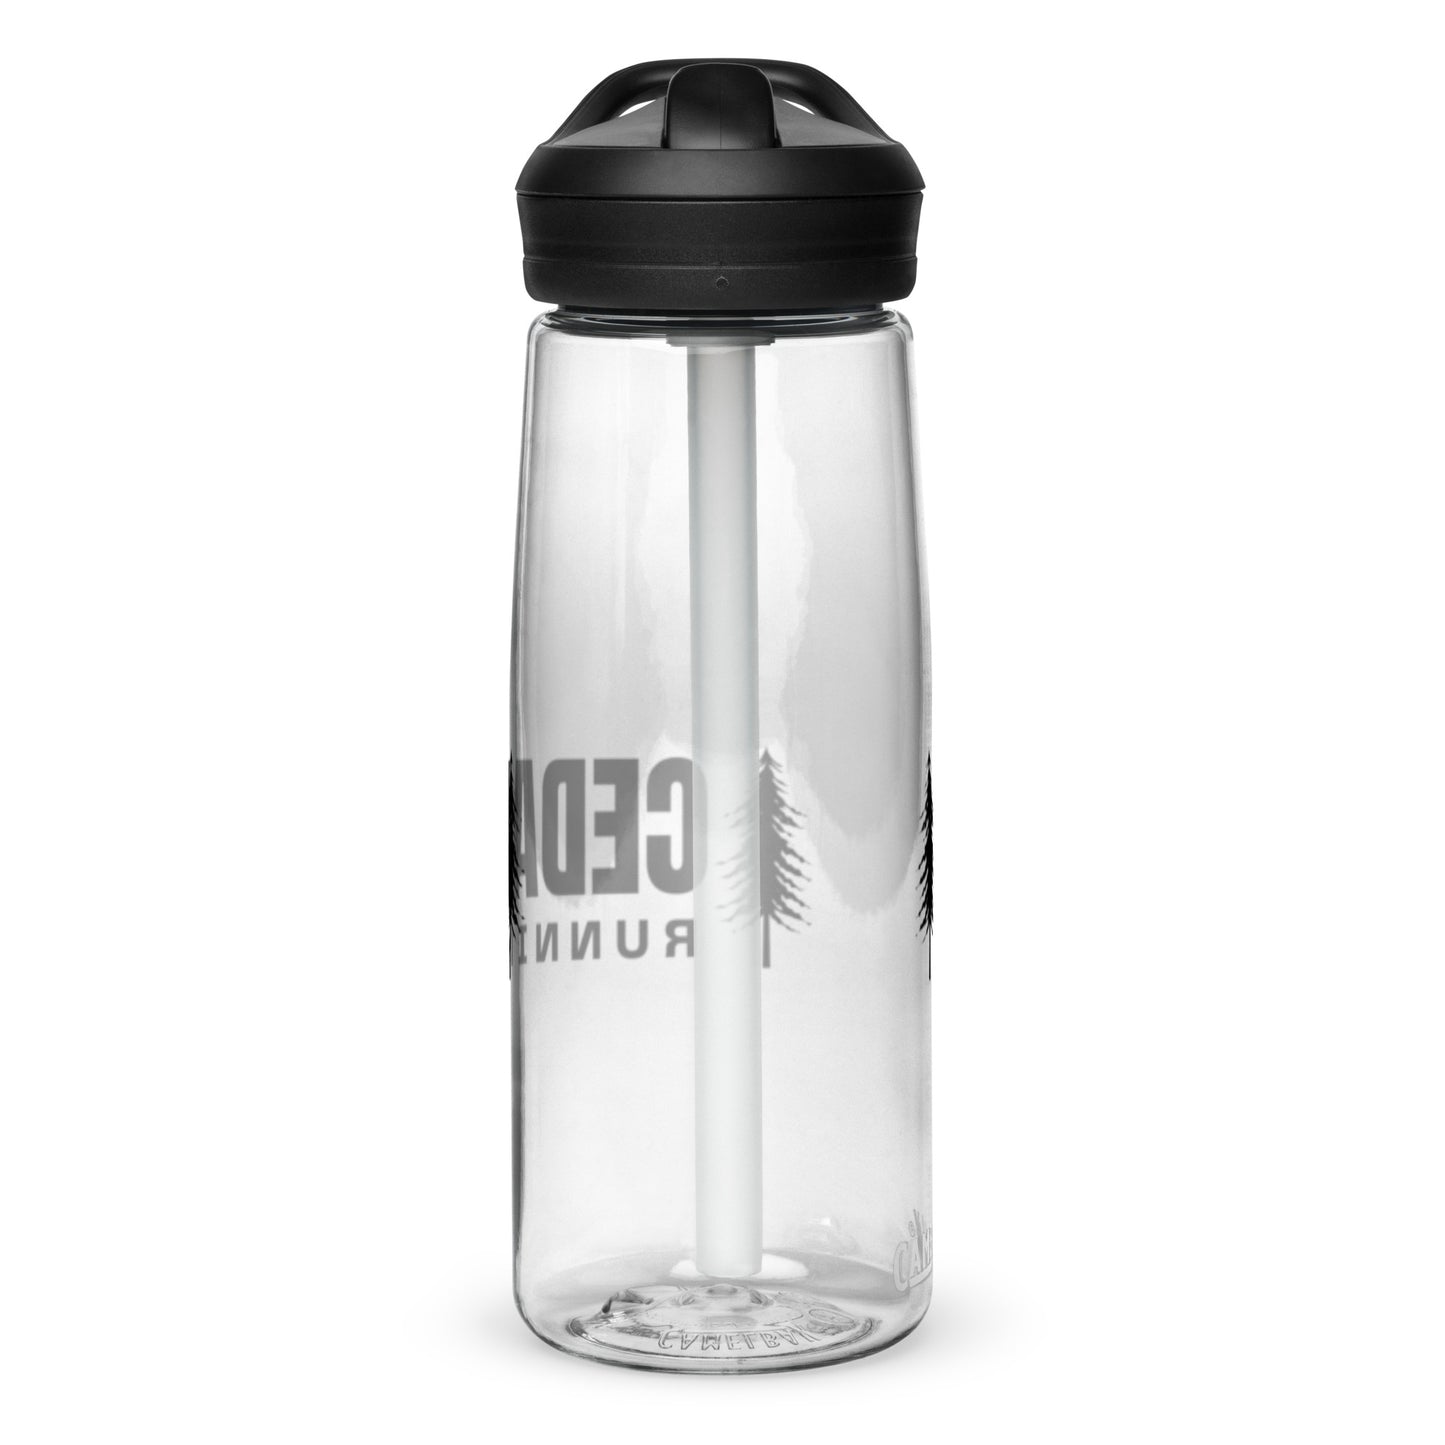 CCRC CamelBak Water Bottle